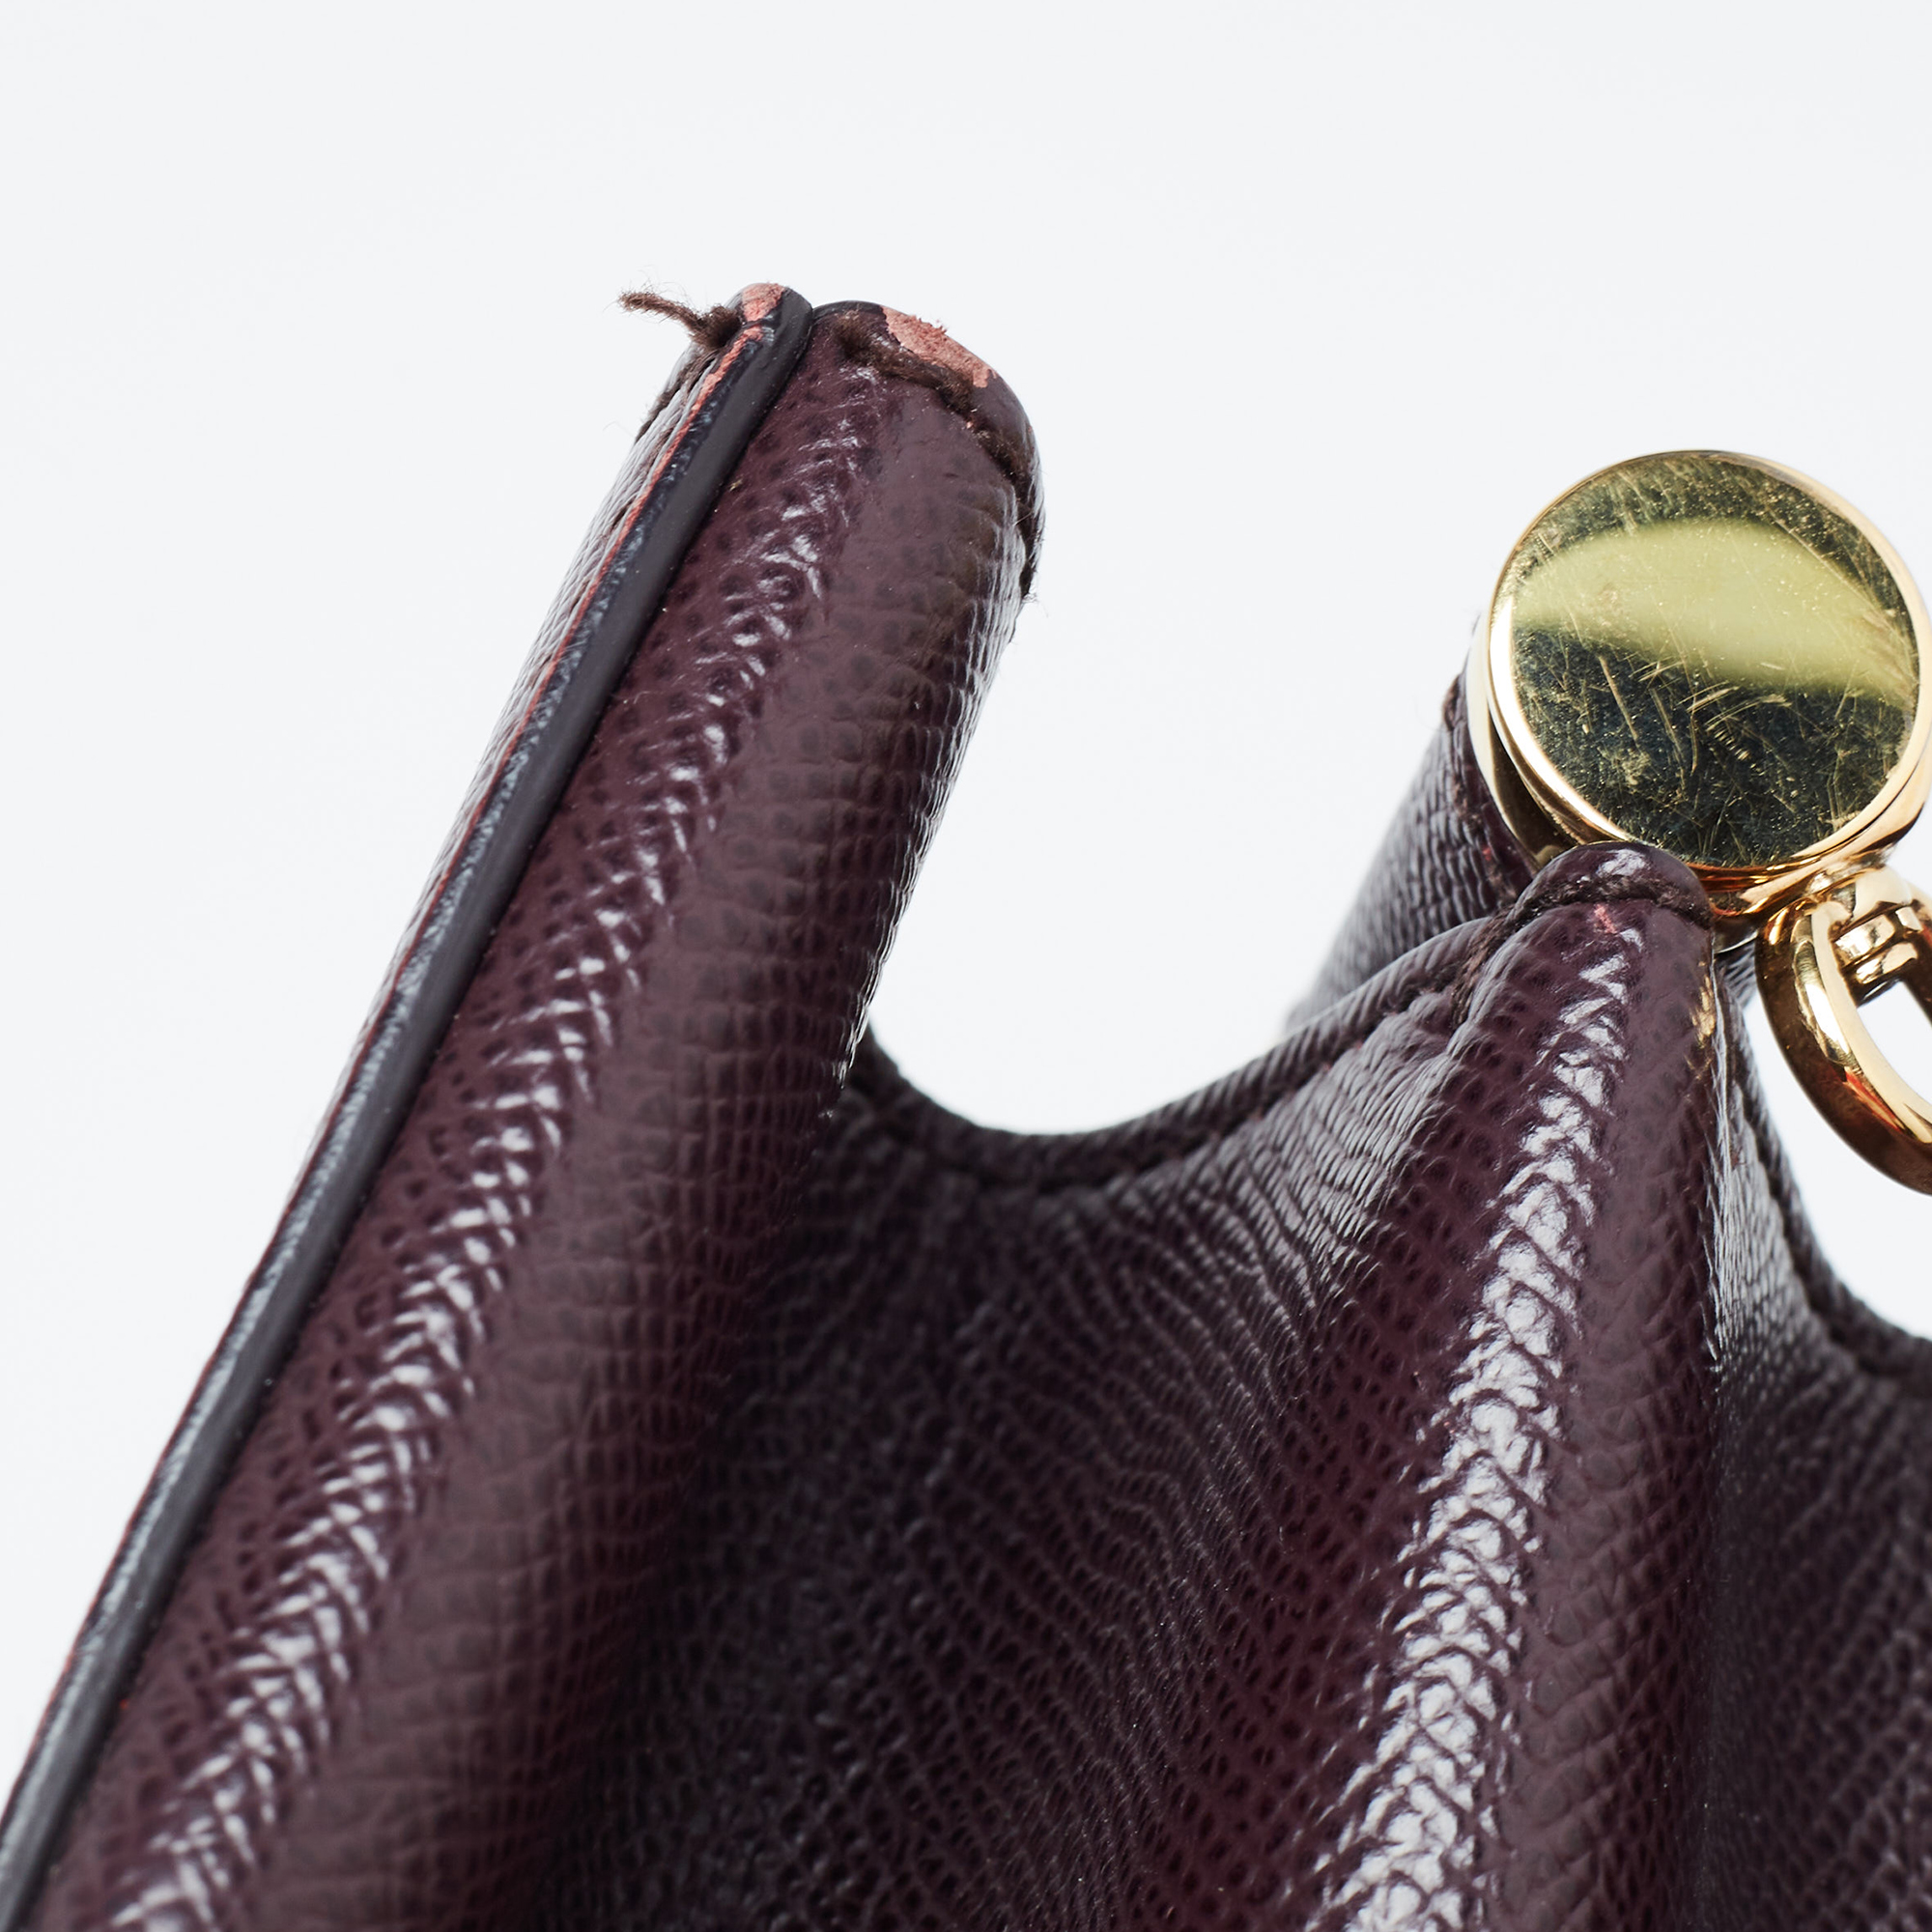 Dolce & Gabbana Burgundy Leather Sicily Top Handle Bag